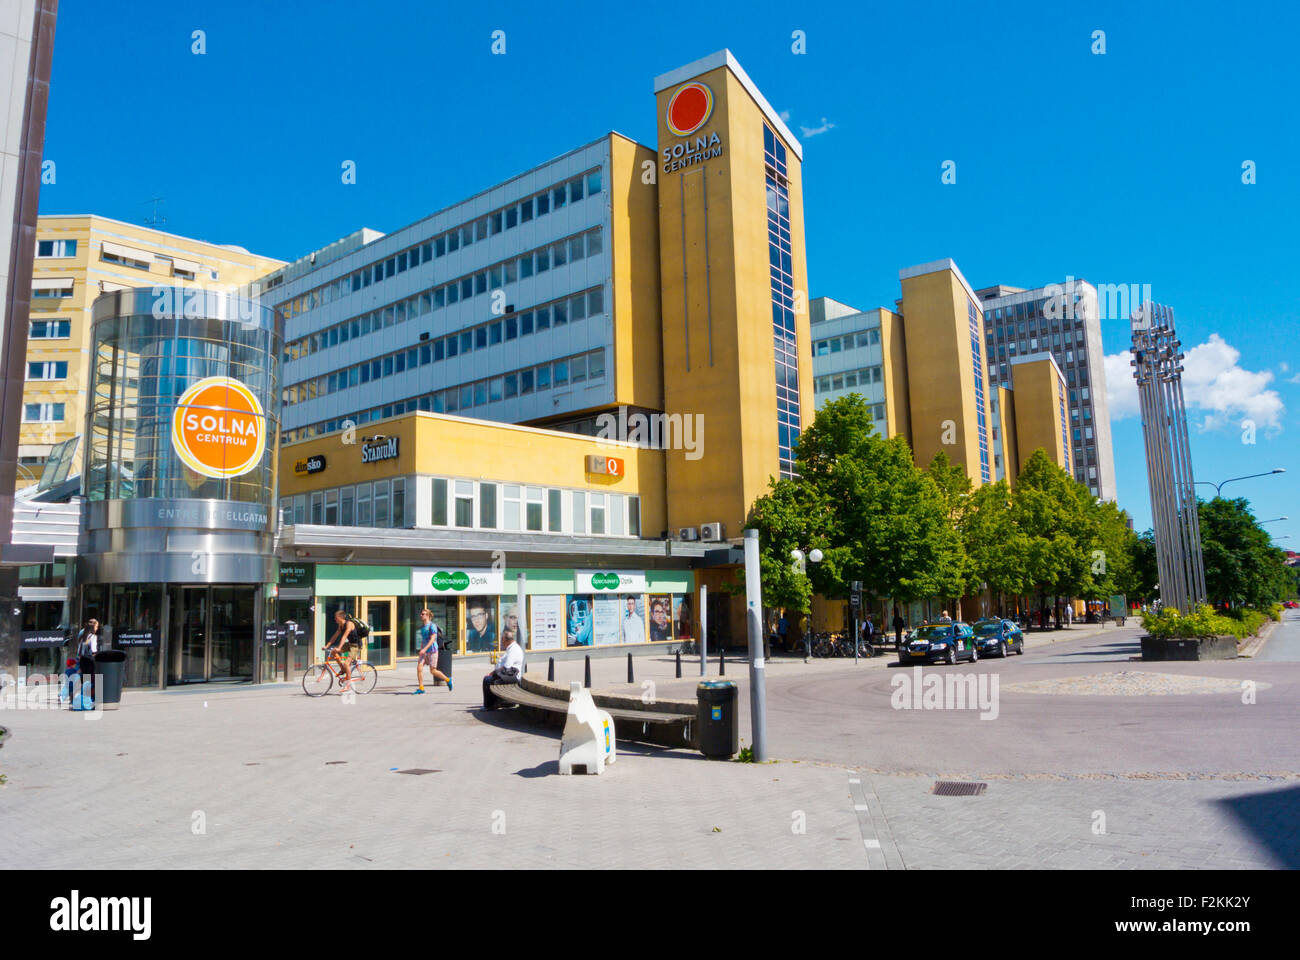 Solna centrum shopping centre, Solna Torg, Solna district, Stockholm,  Sweden Stock Photo - Alamy